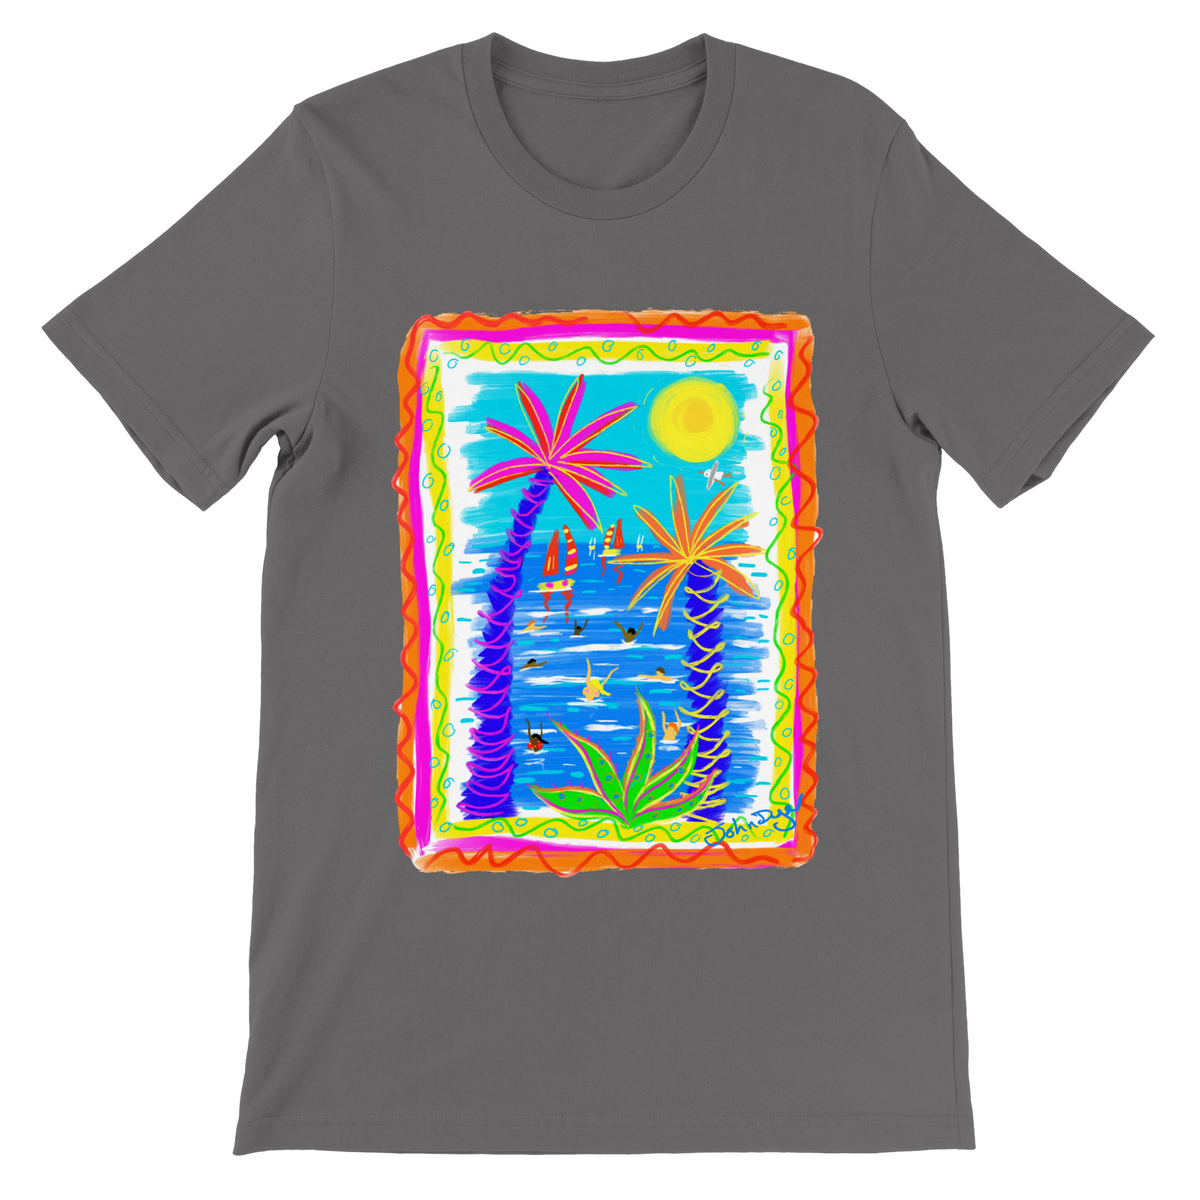 John Dyer Unisex Art T-Shirt. Tropical Bathers and Sunshine